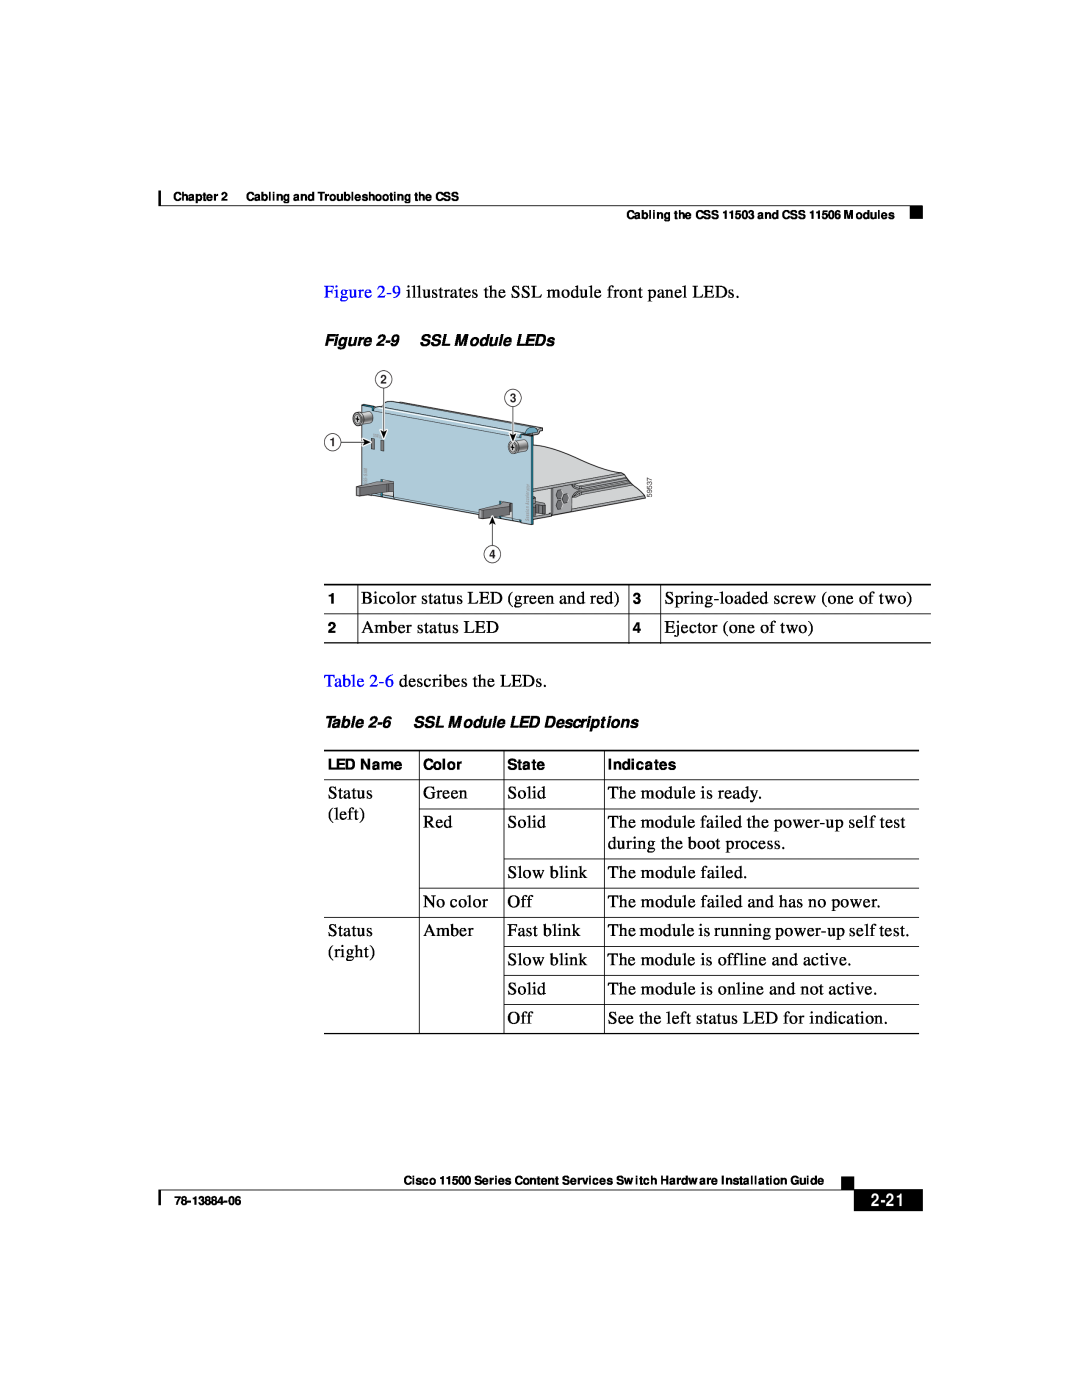 Cisco Systems 11500 Series manual LED Name, Color, State, Indicates, 2-21, 9 SSL Module LEDs, 6 SSL Module LED Descriptions 